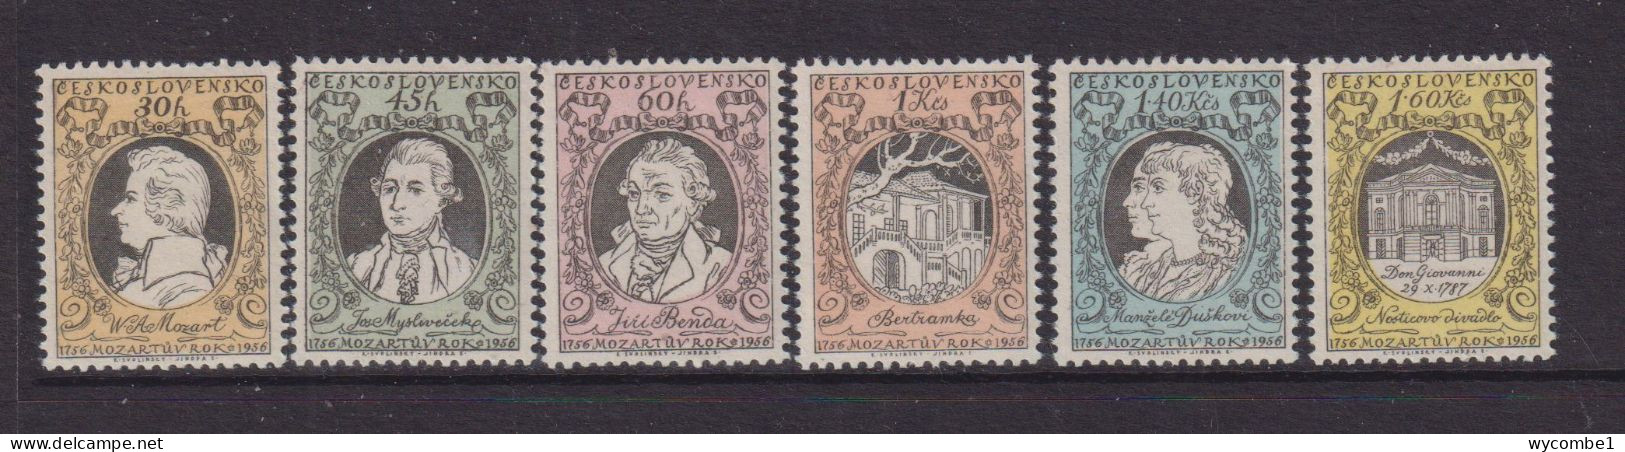 CZECHOSLOVAKIA  - 1956  Mozart Set  Never Hinged Mint - Unused Stamps